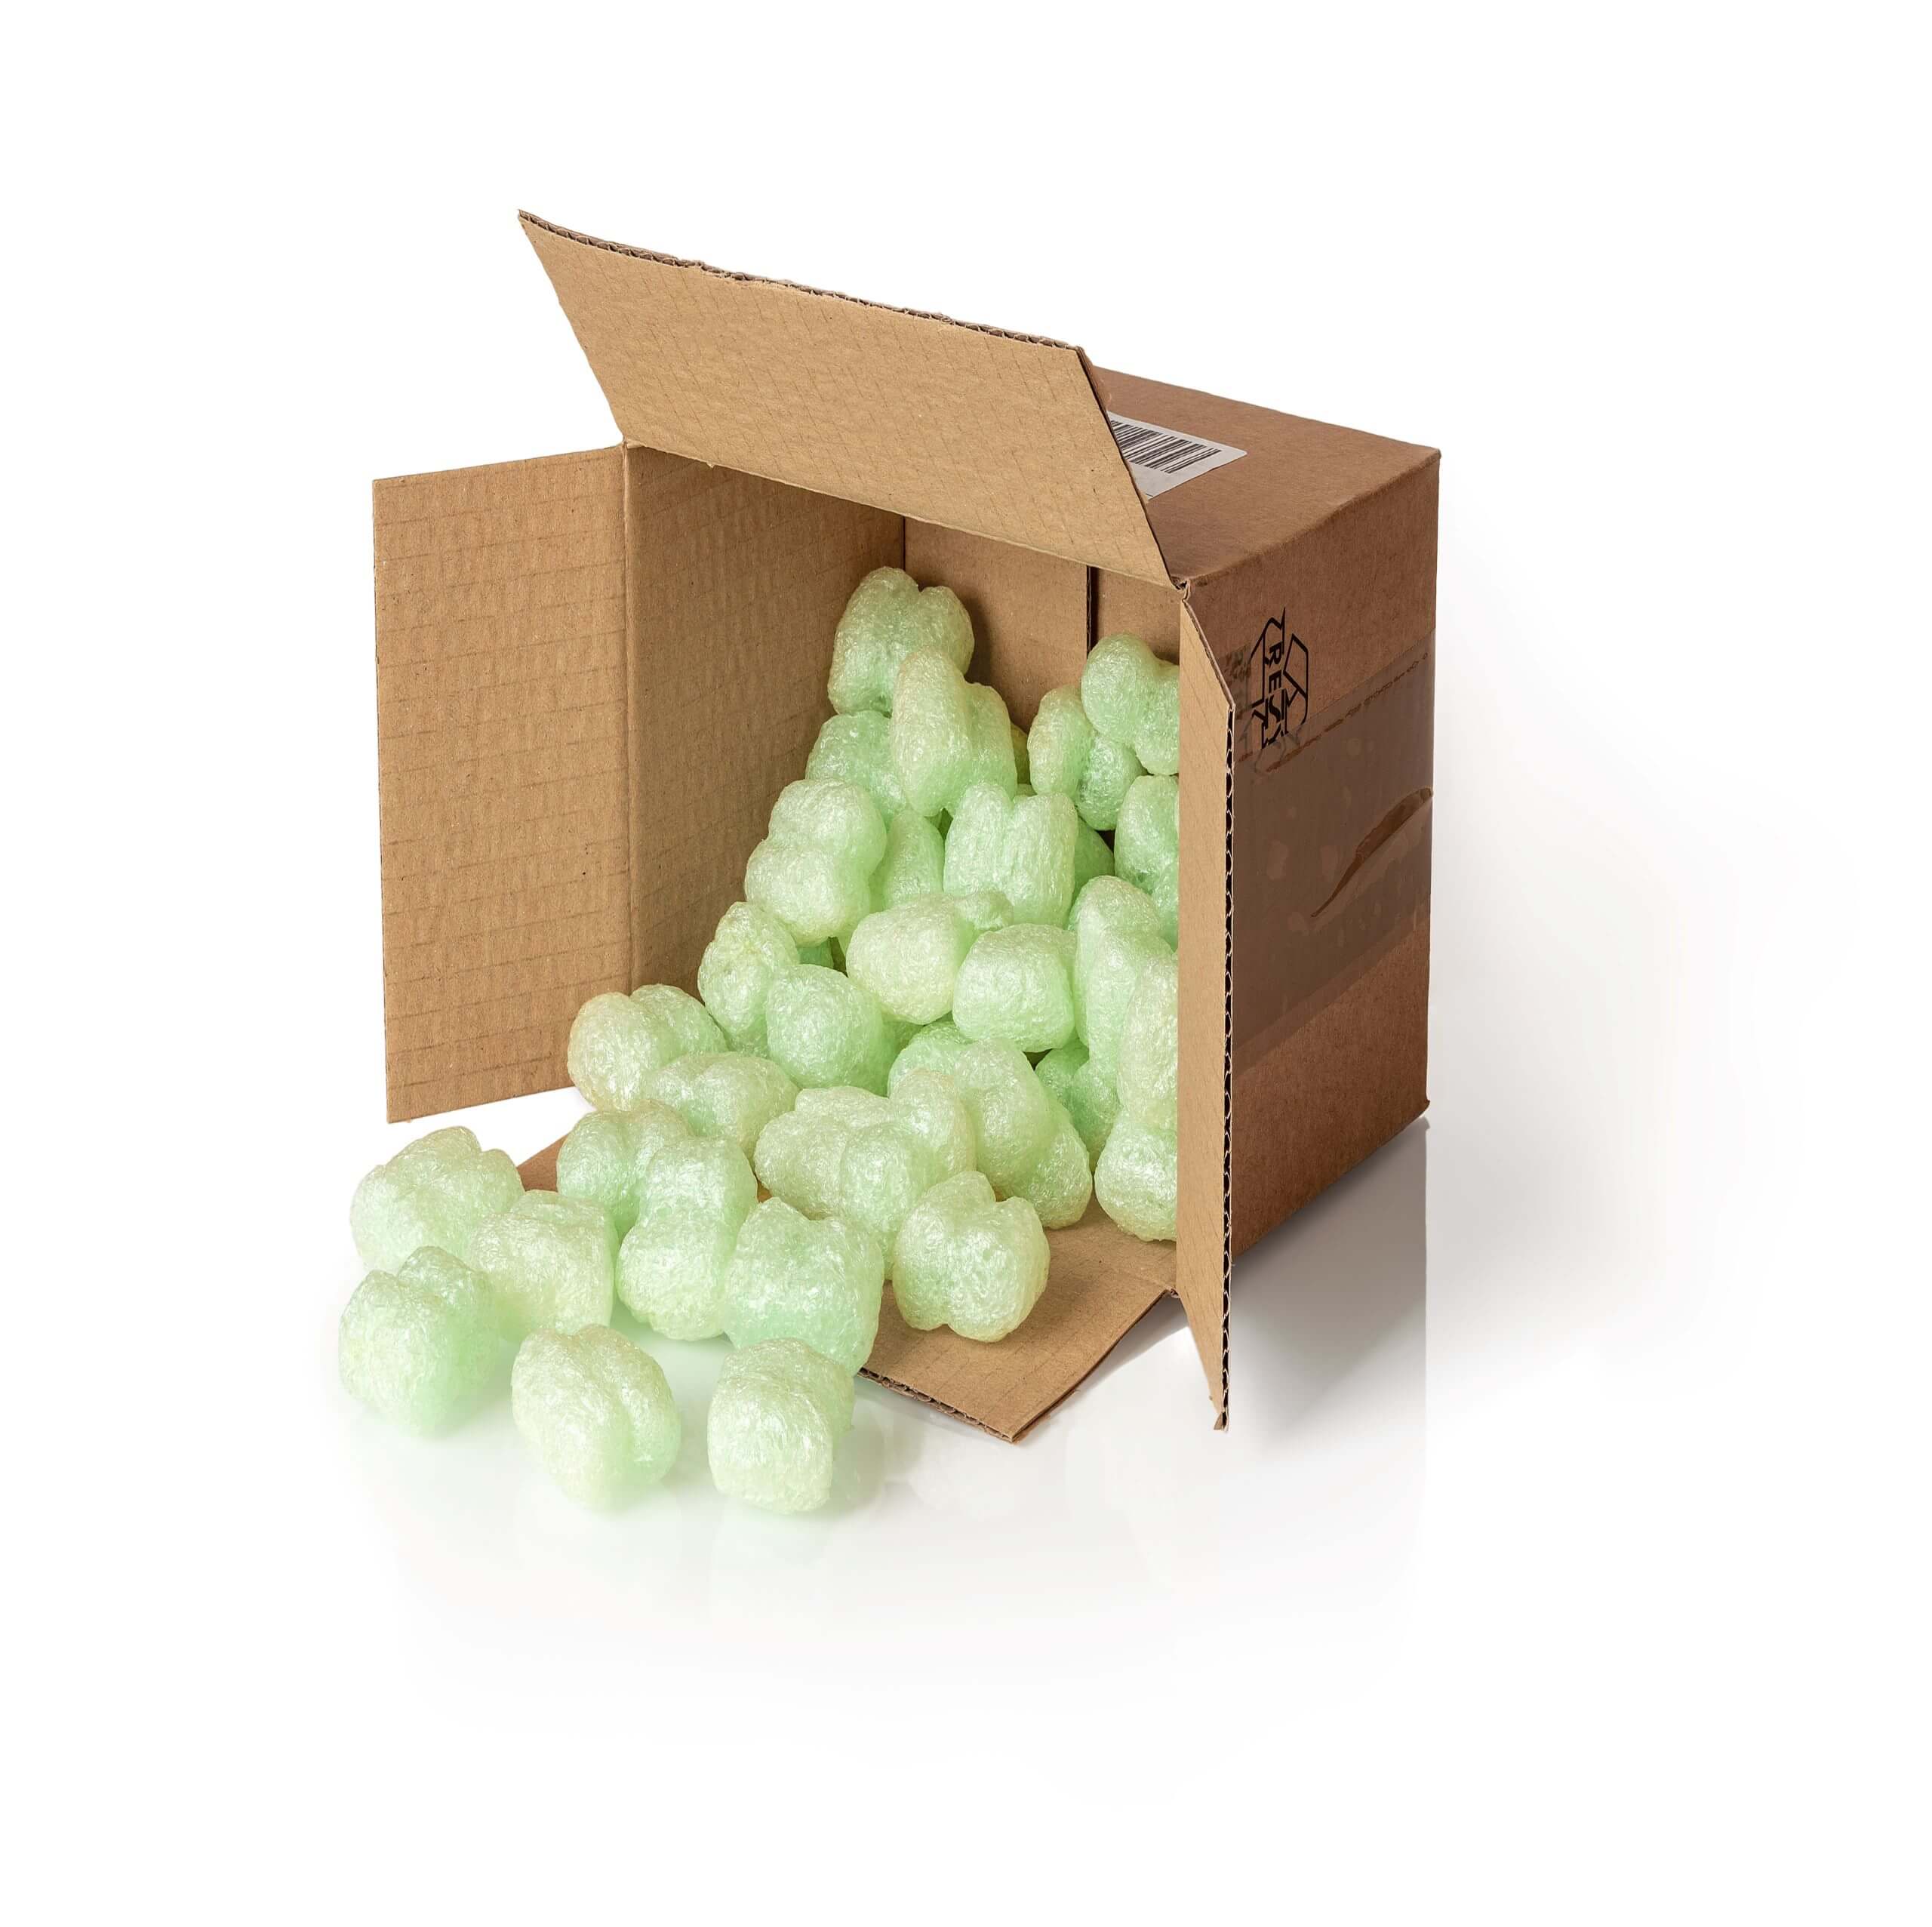 An image of Styrofoam Packing Peanuts.